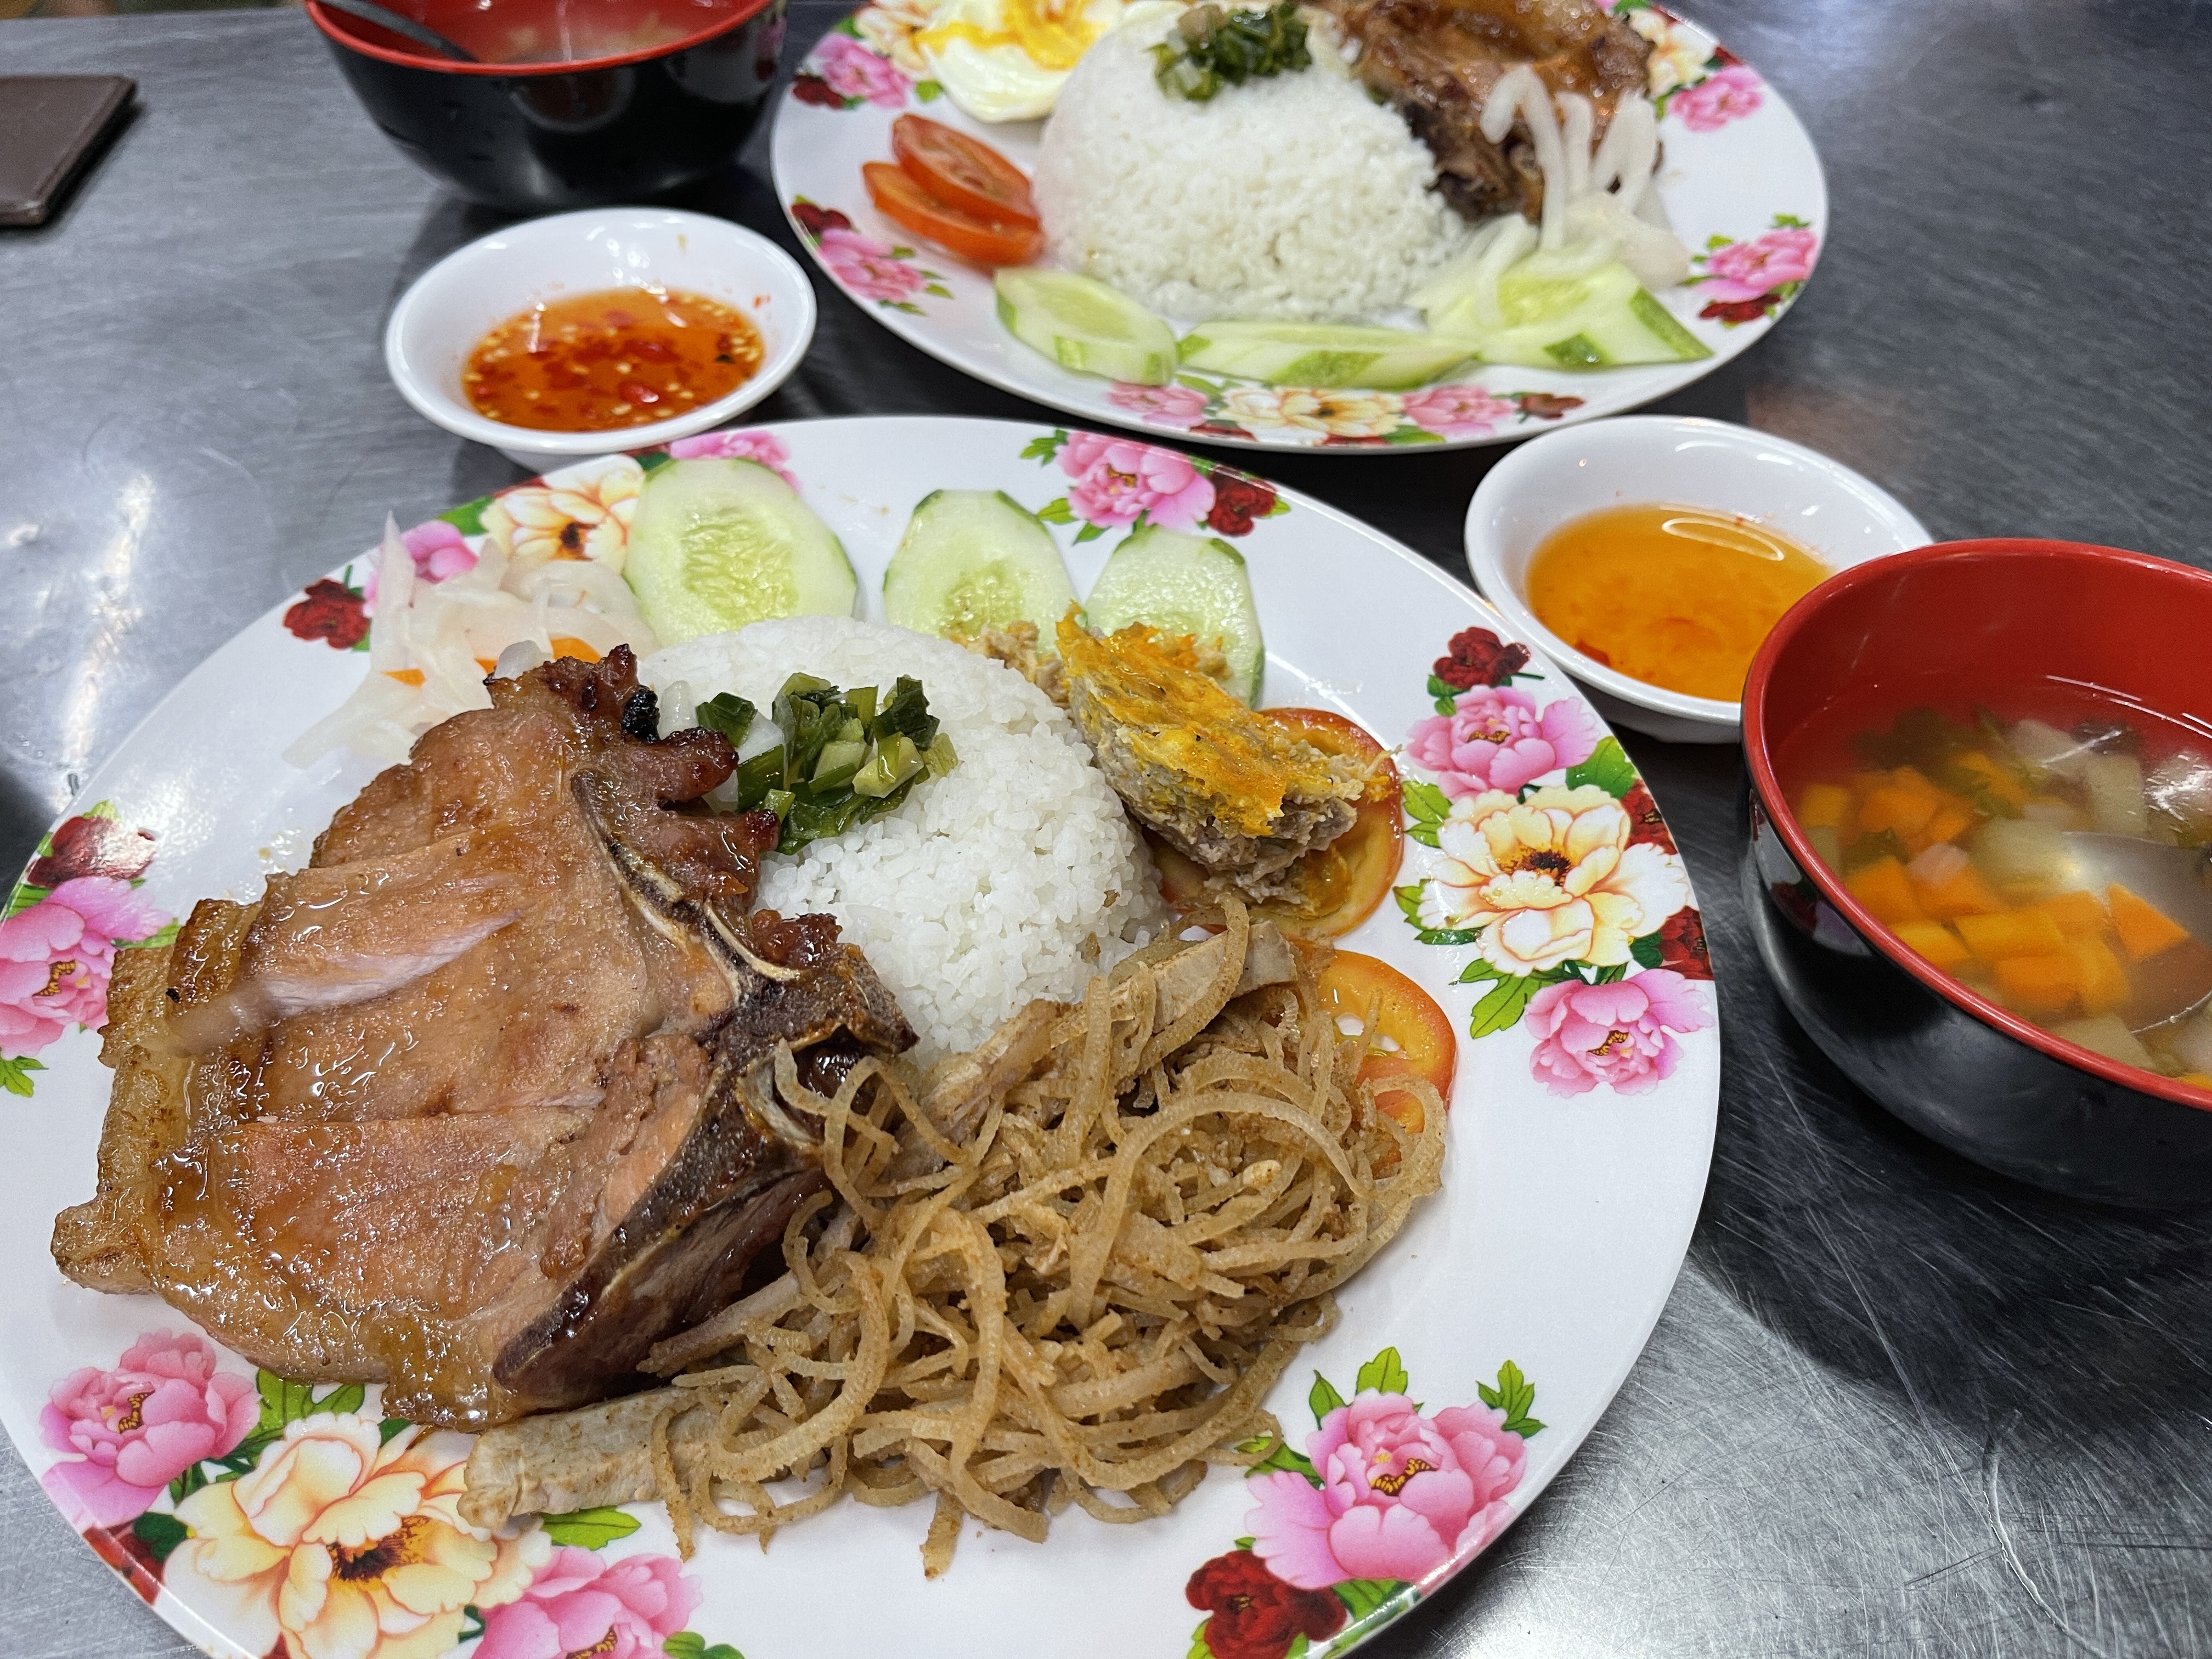 Fact or fiction: “Vietnamese street food is always good”